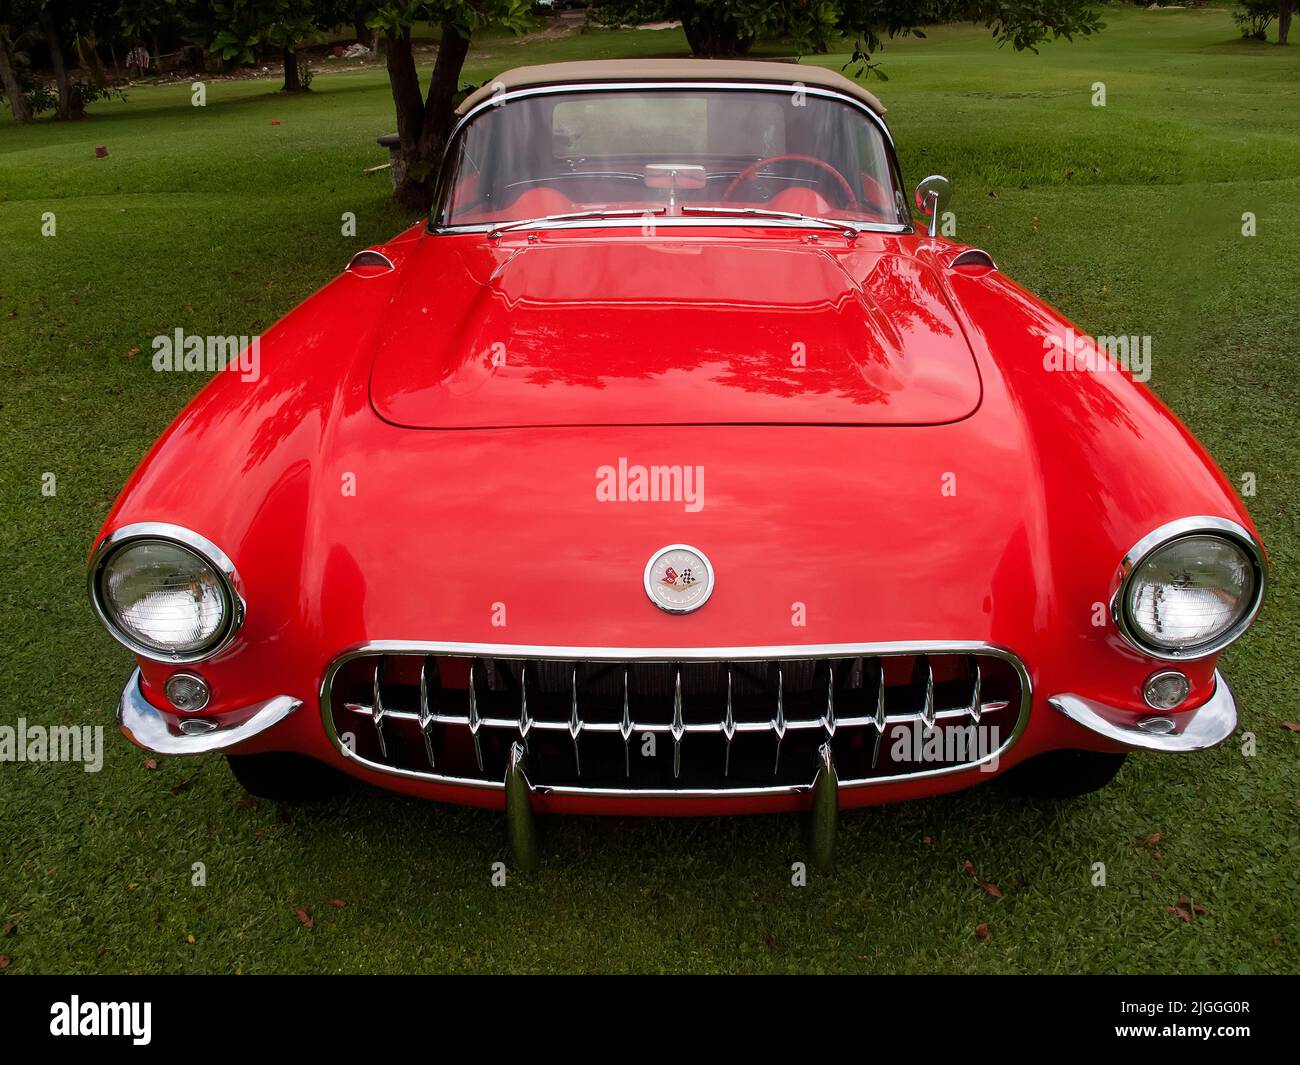 Vintage red Chevrolet Corvette Stock Photo